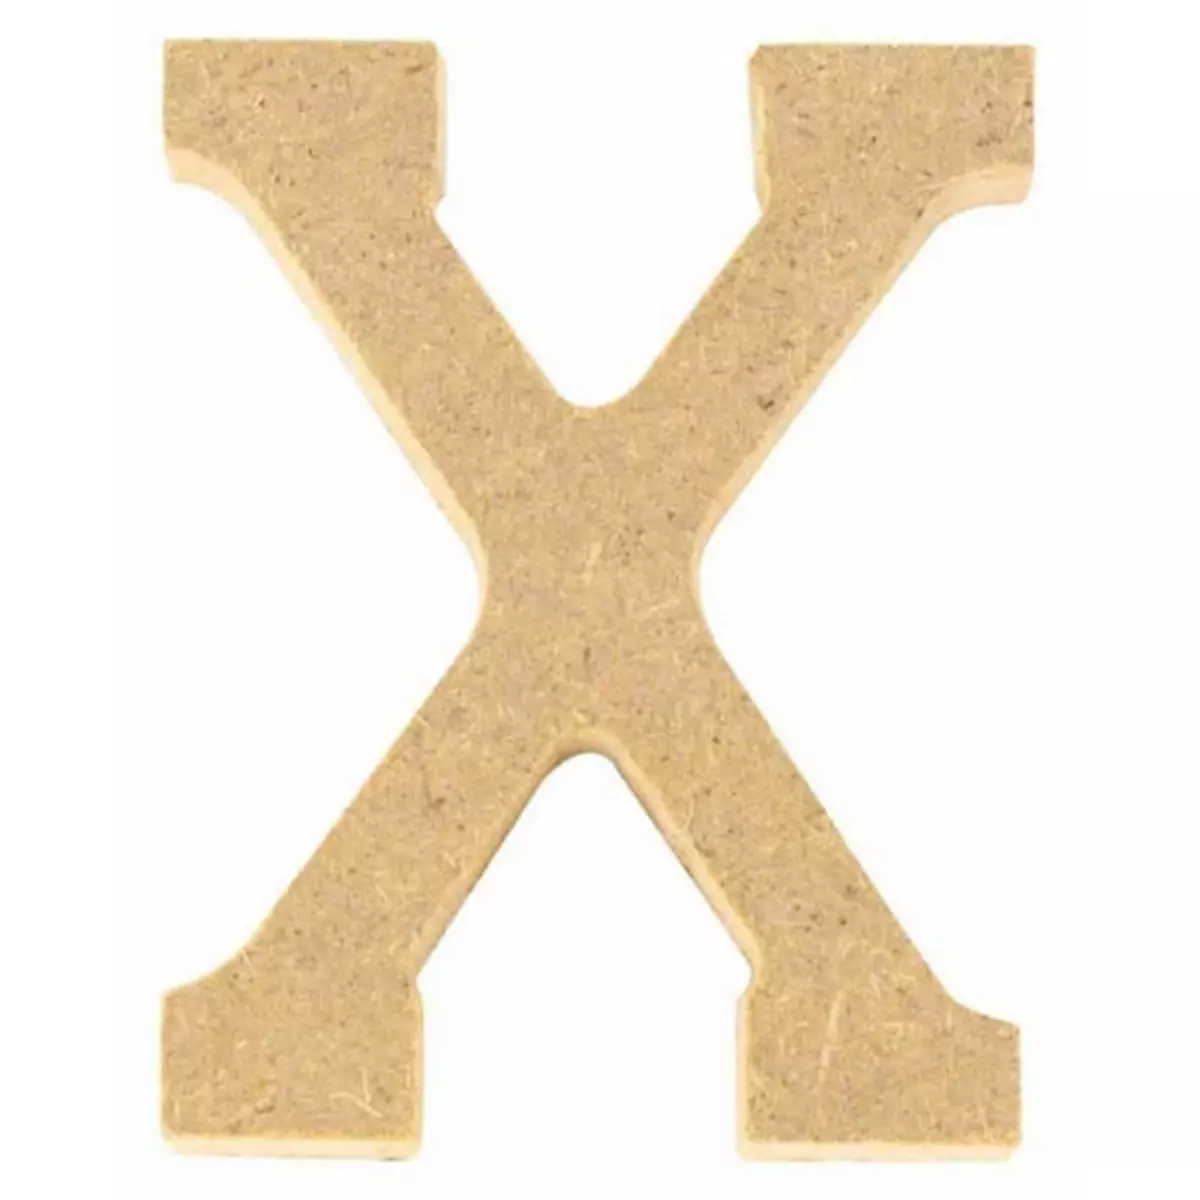  Lettre X en bois